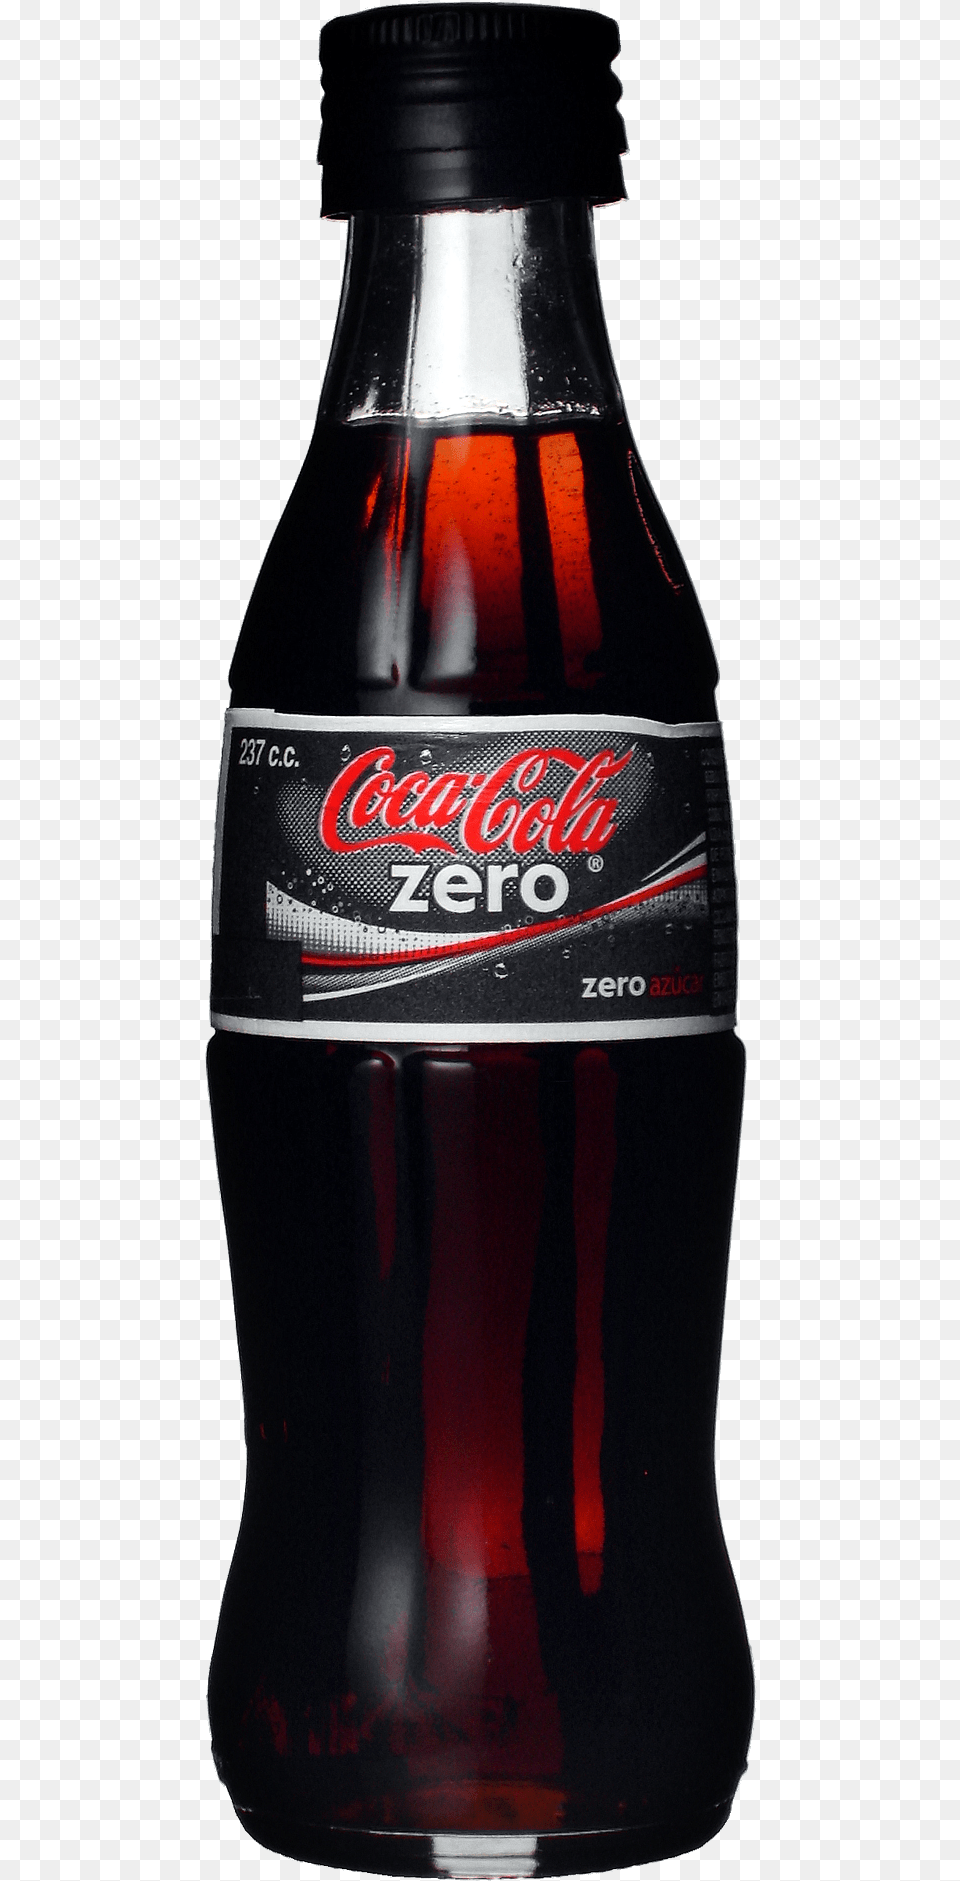 Coca Cola Zero Bottle, Beverage, Coke, Soda, Alcohol Free Png Download